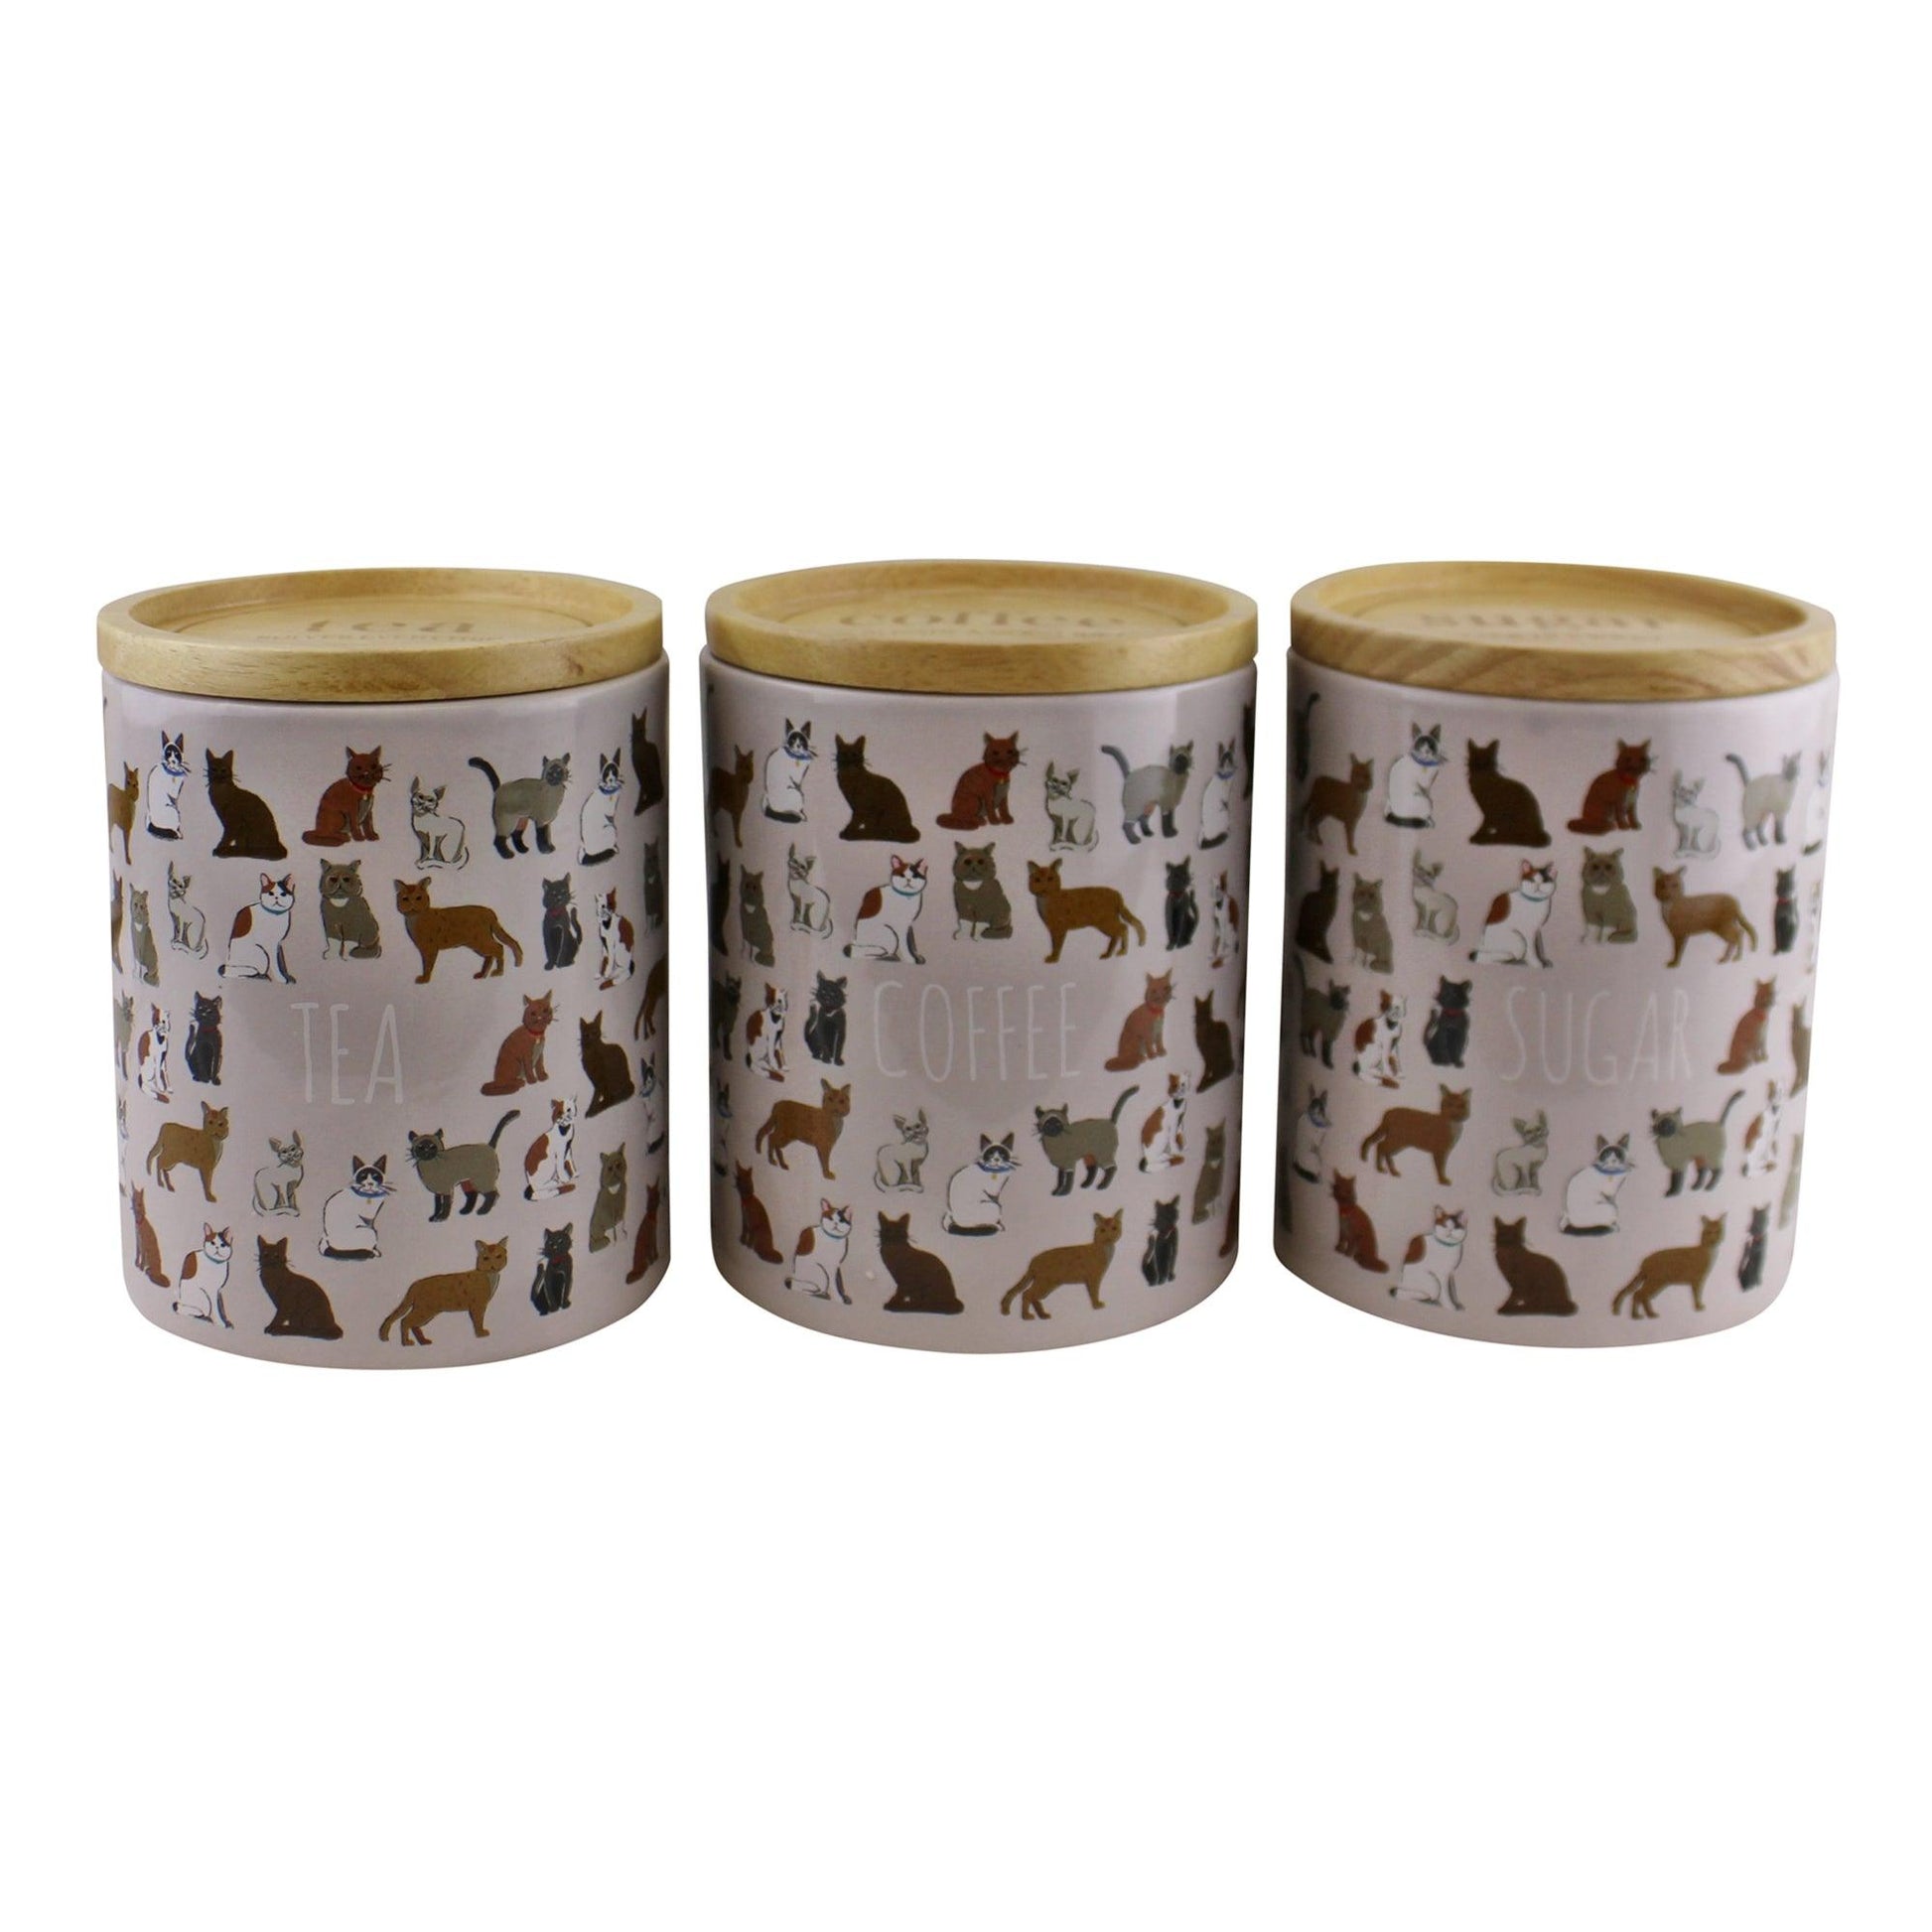 Set of 3 Ceramic Cat Design Tea, Coffee & Sugar Canisters Wooden Lids Side View Design